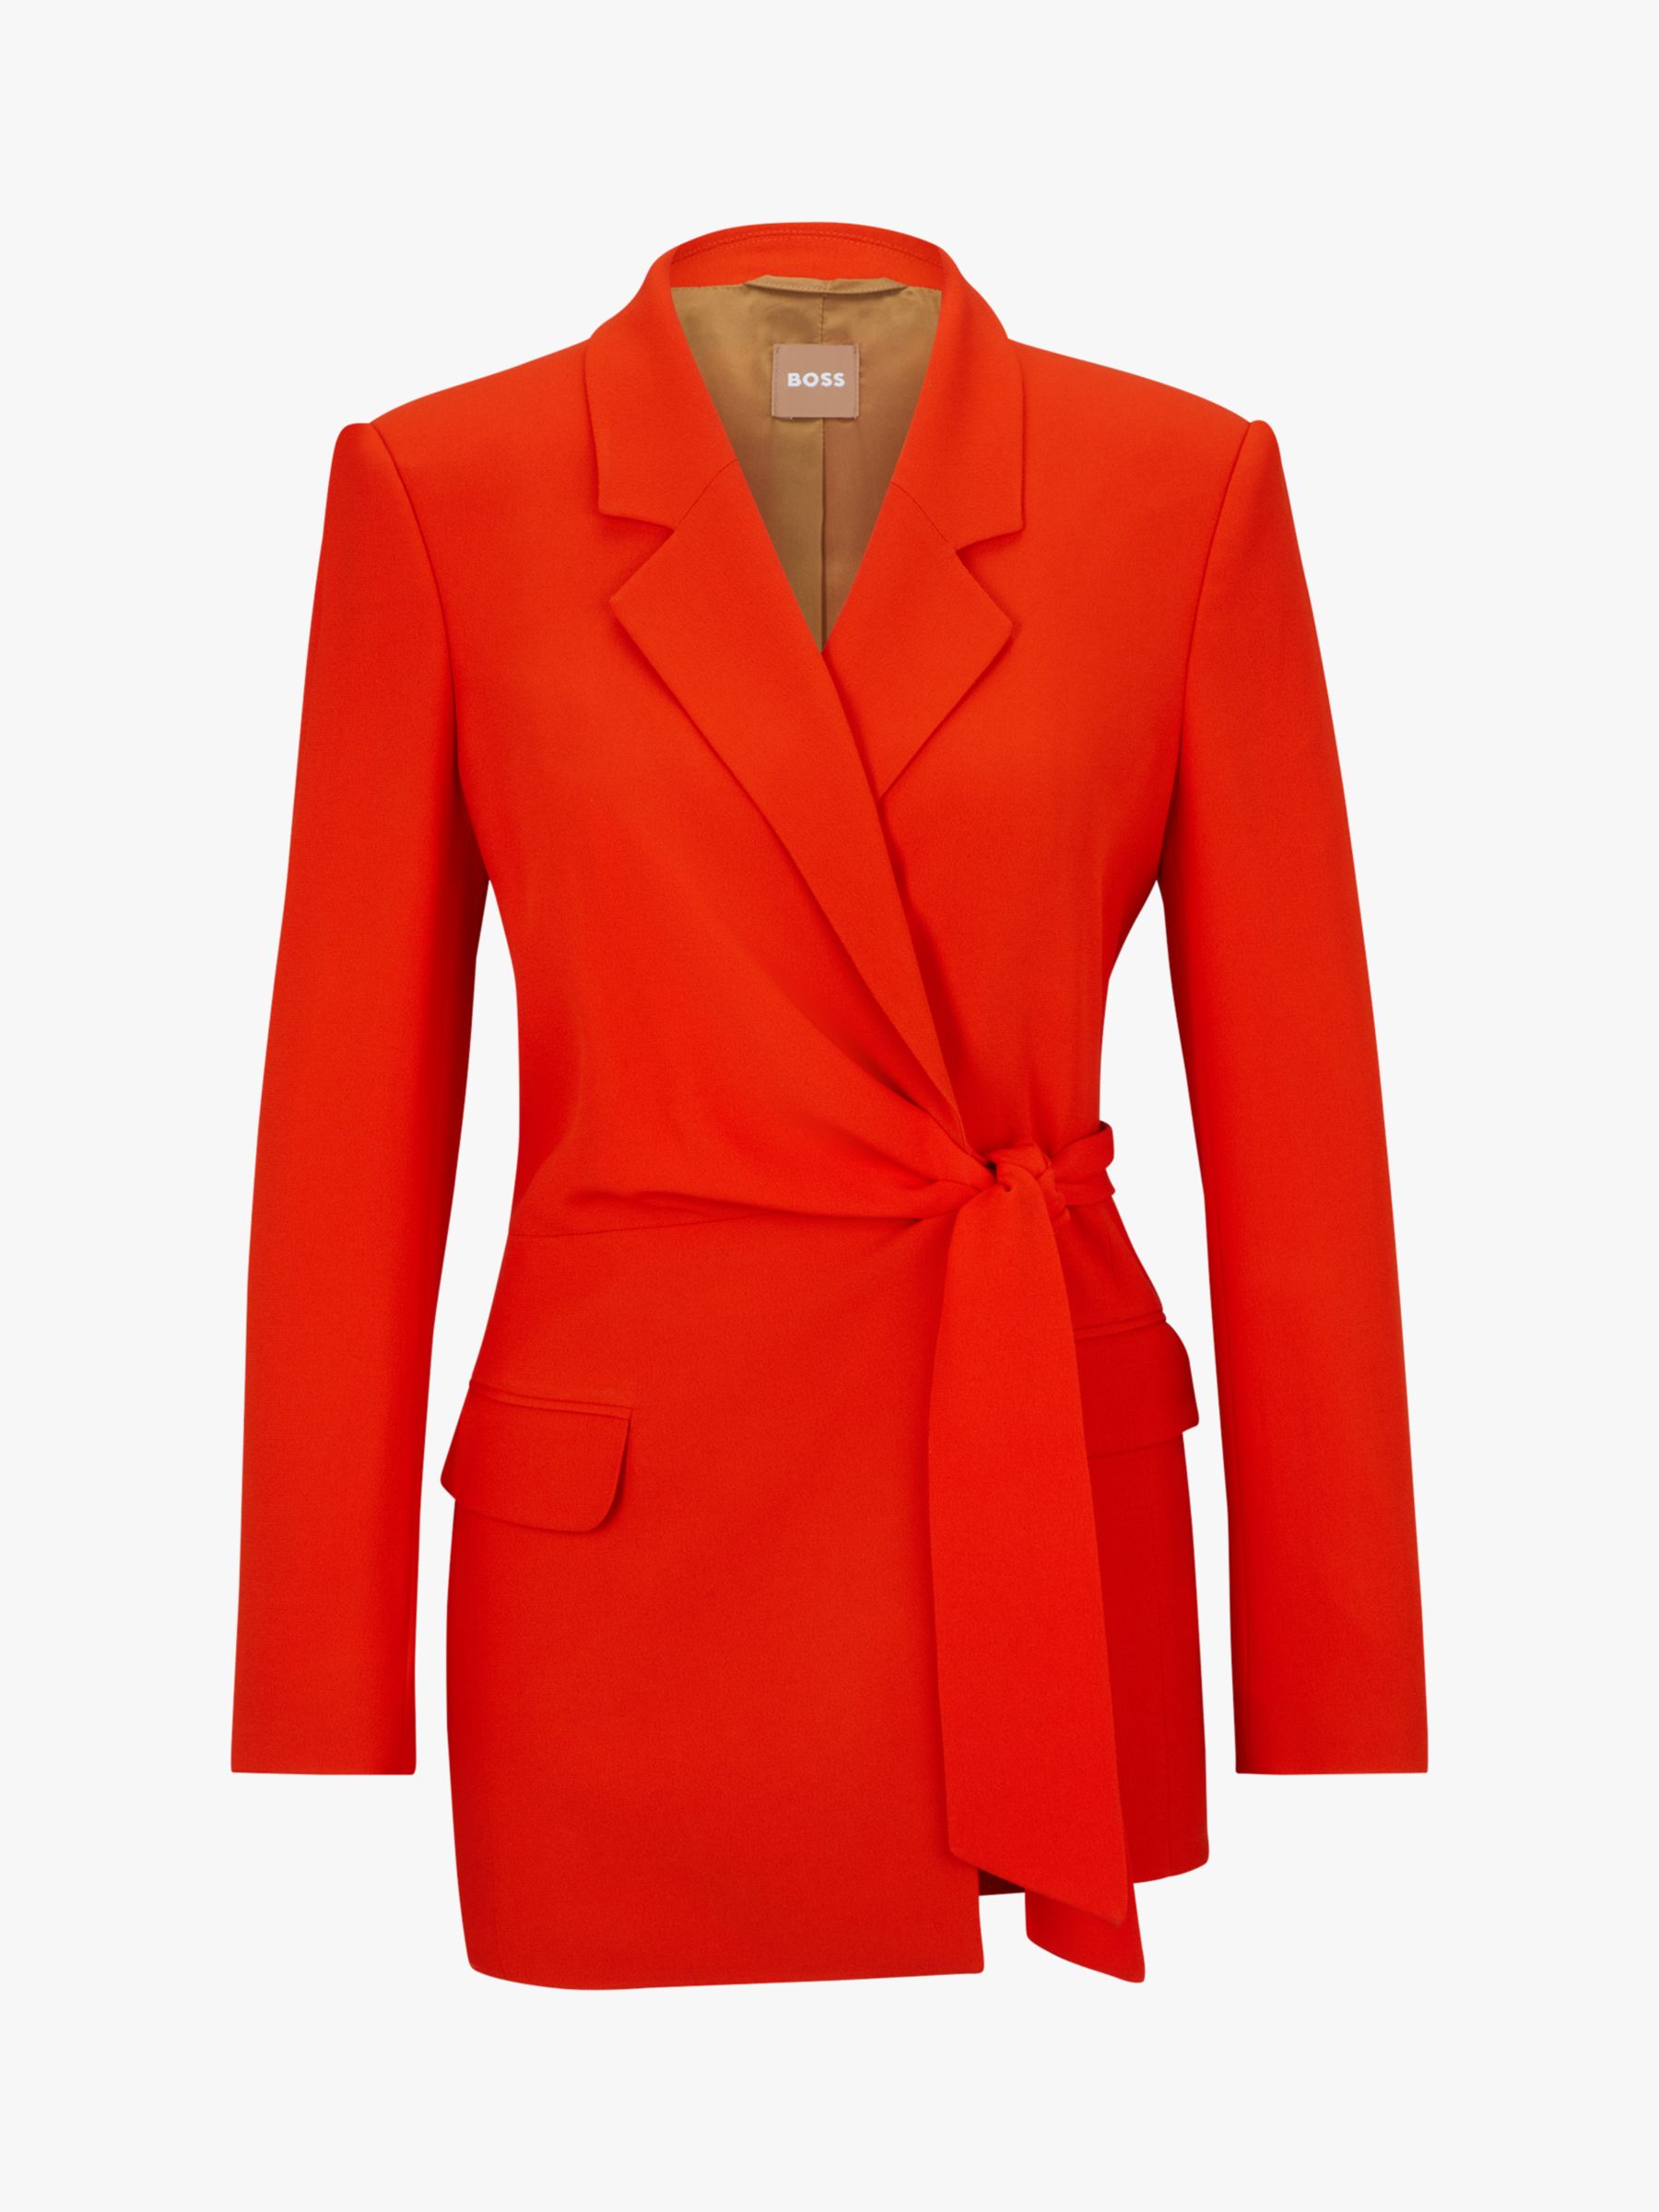 HUGO BOSS Jawana Wrap Blazer, Bright Orange at John Lewis & Partners